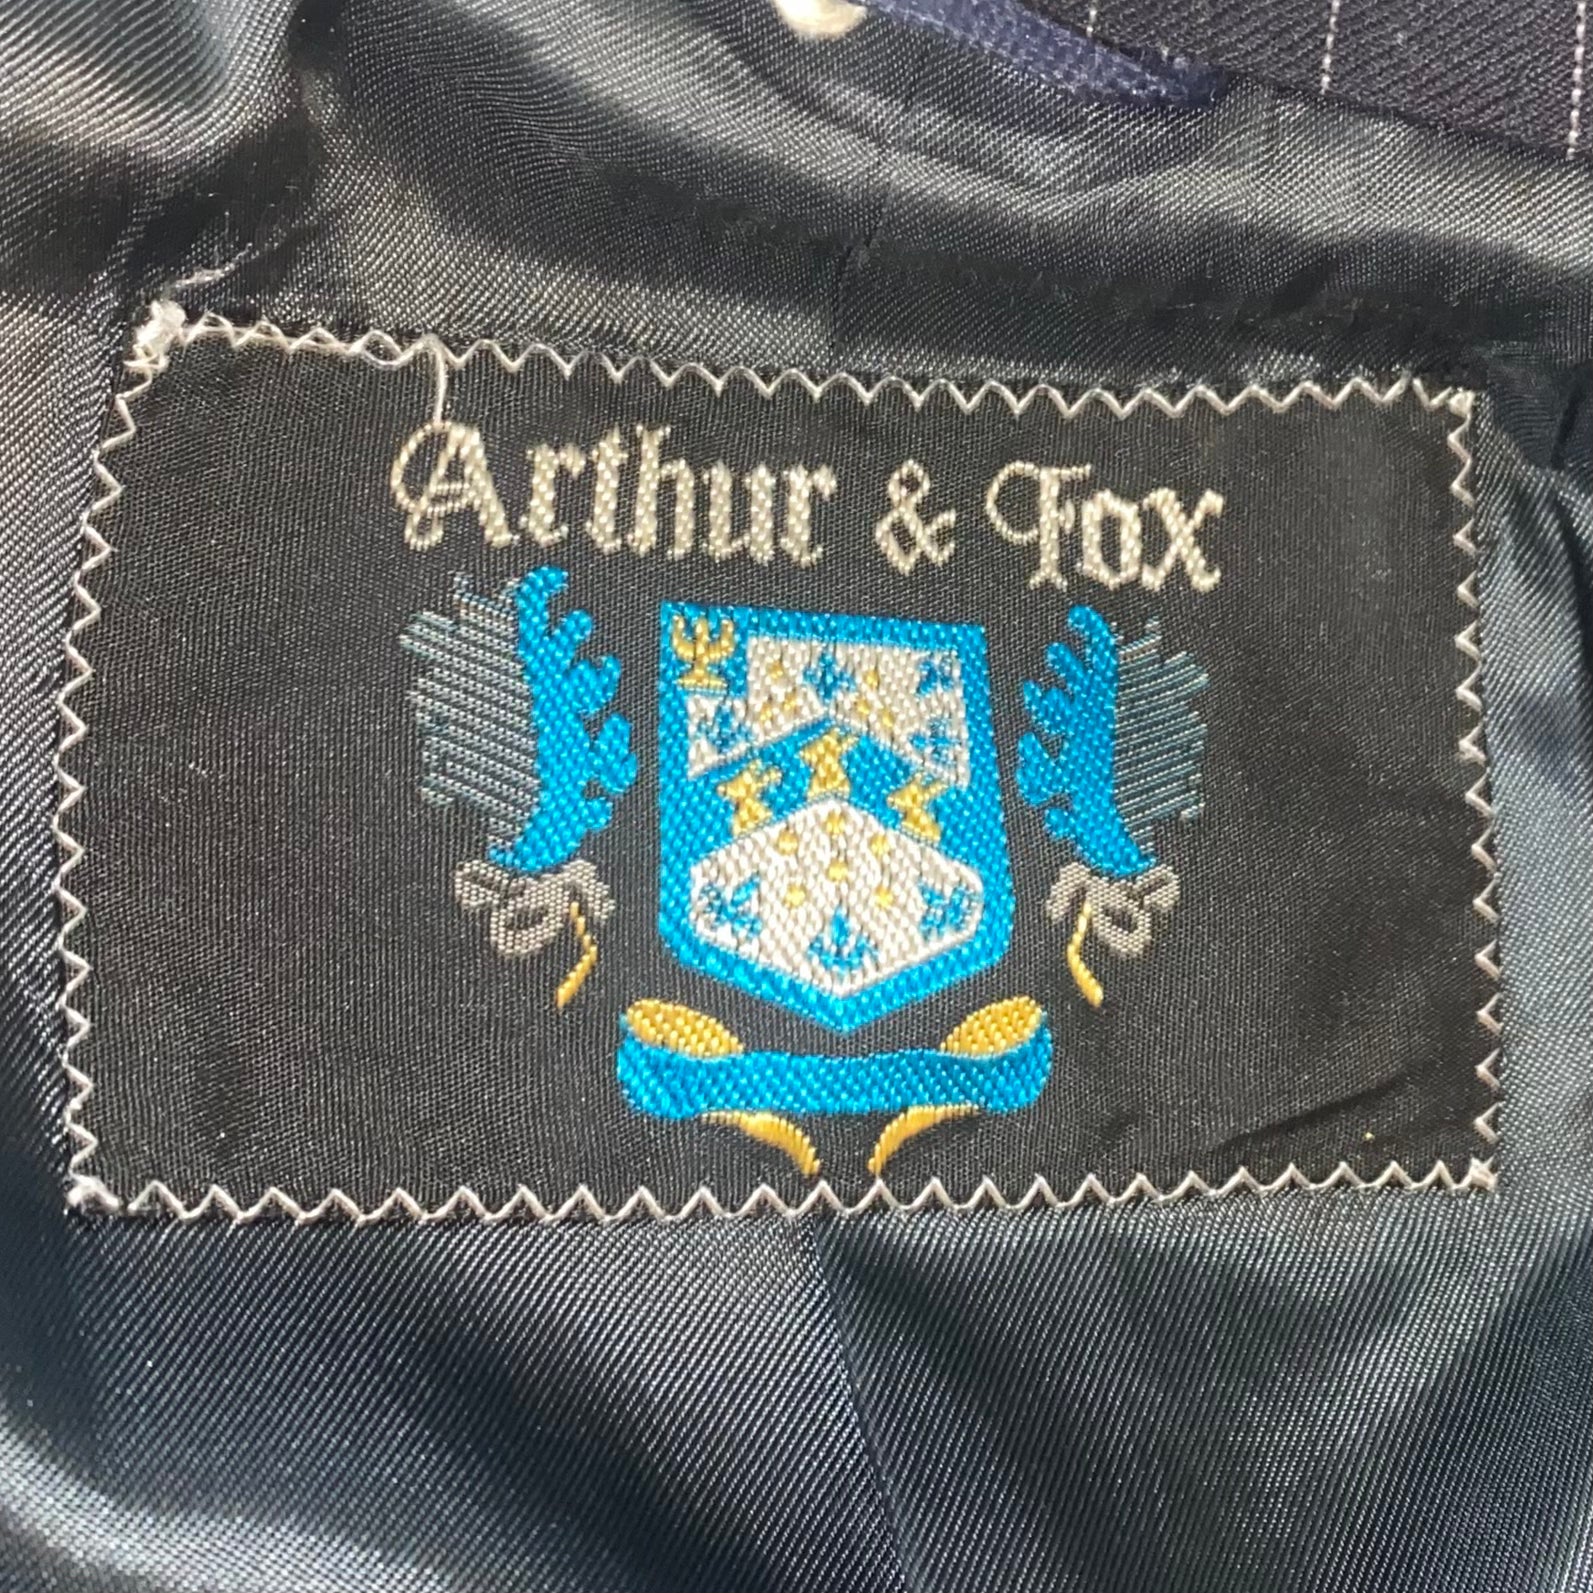 Blazer croisé Arthur & Fox vintage